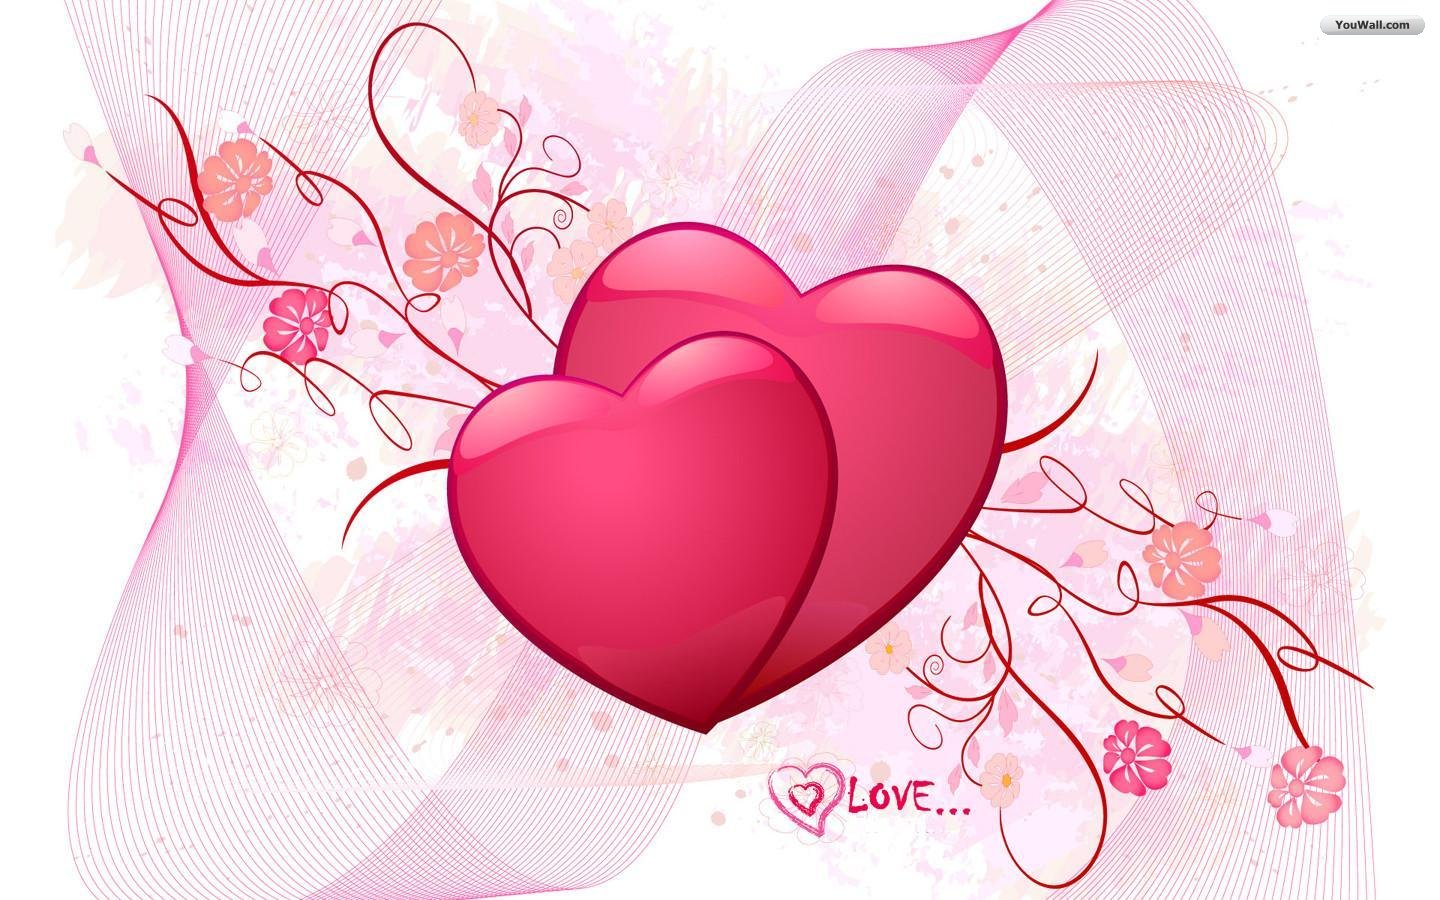 Youwall Love Hearts Wallpaper